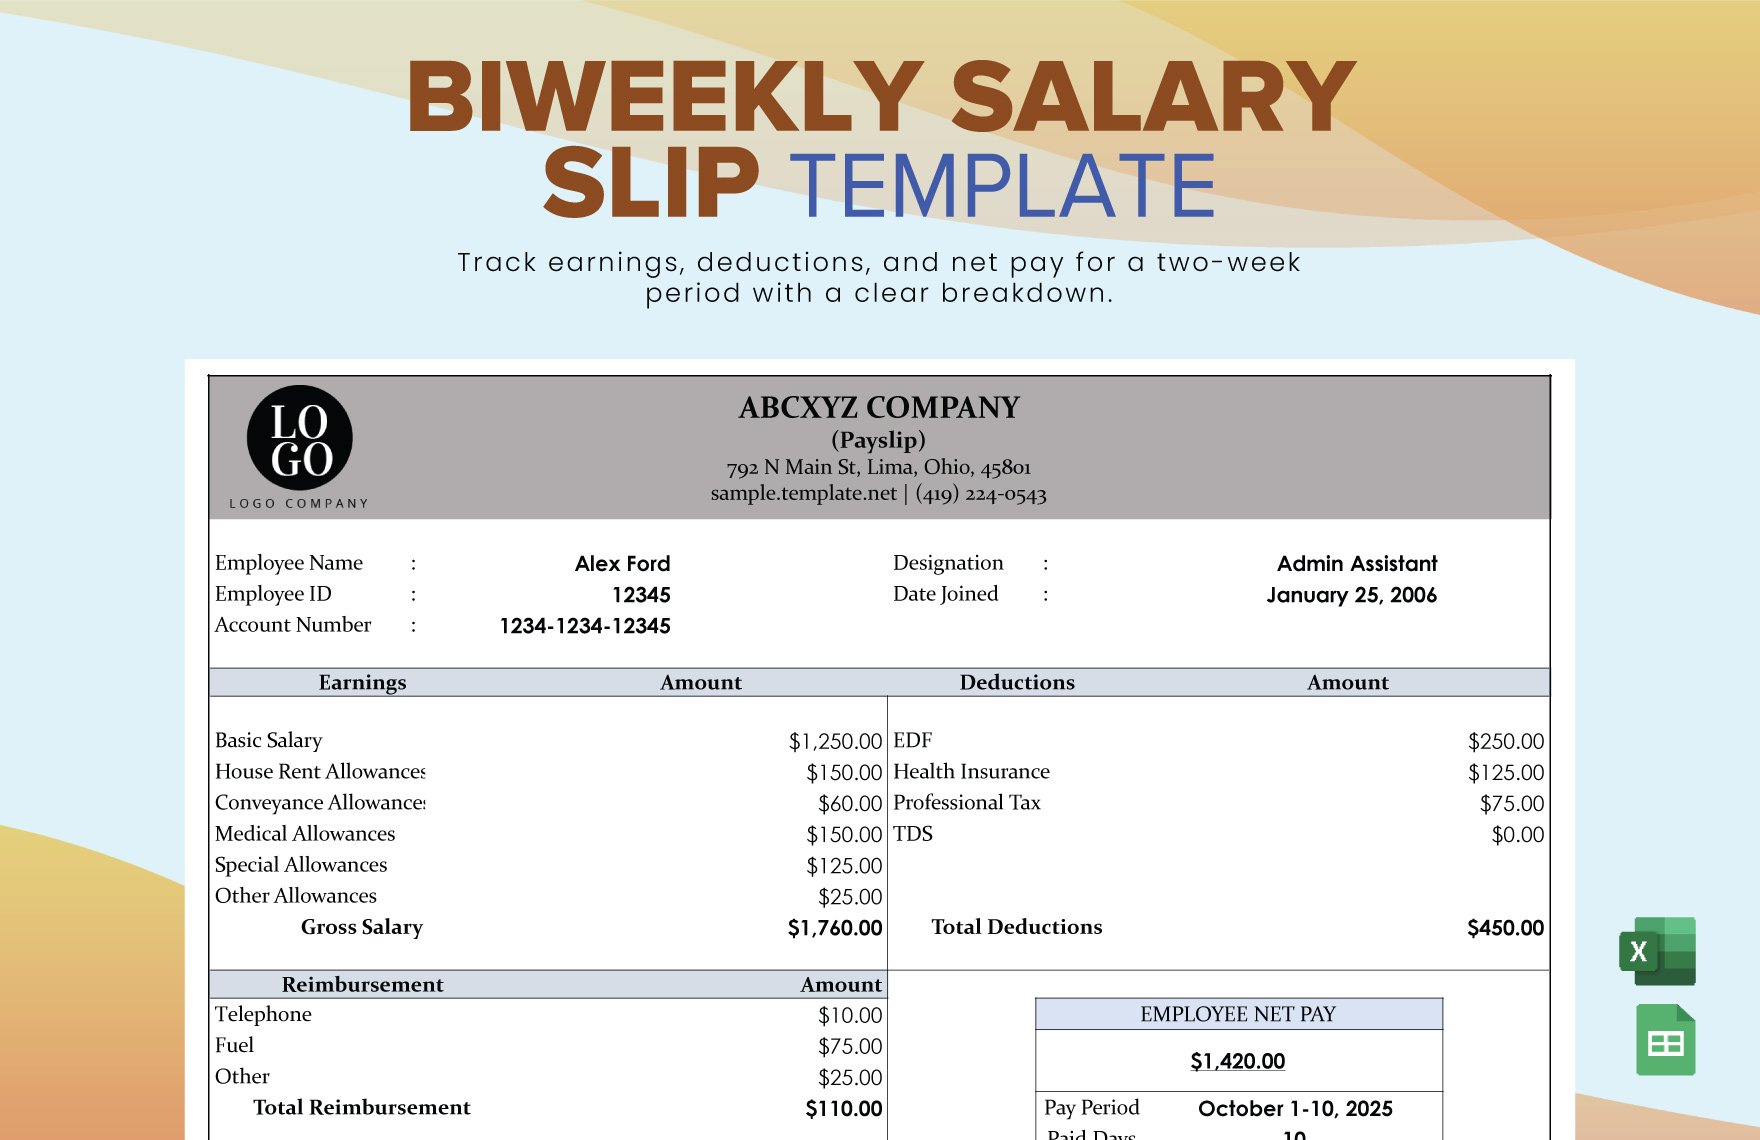 Biweekly Salary Slip in Excel, Google Sheets